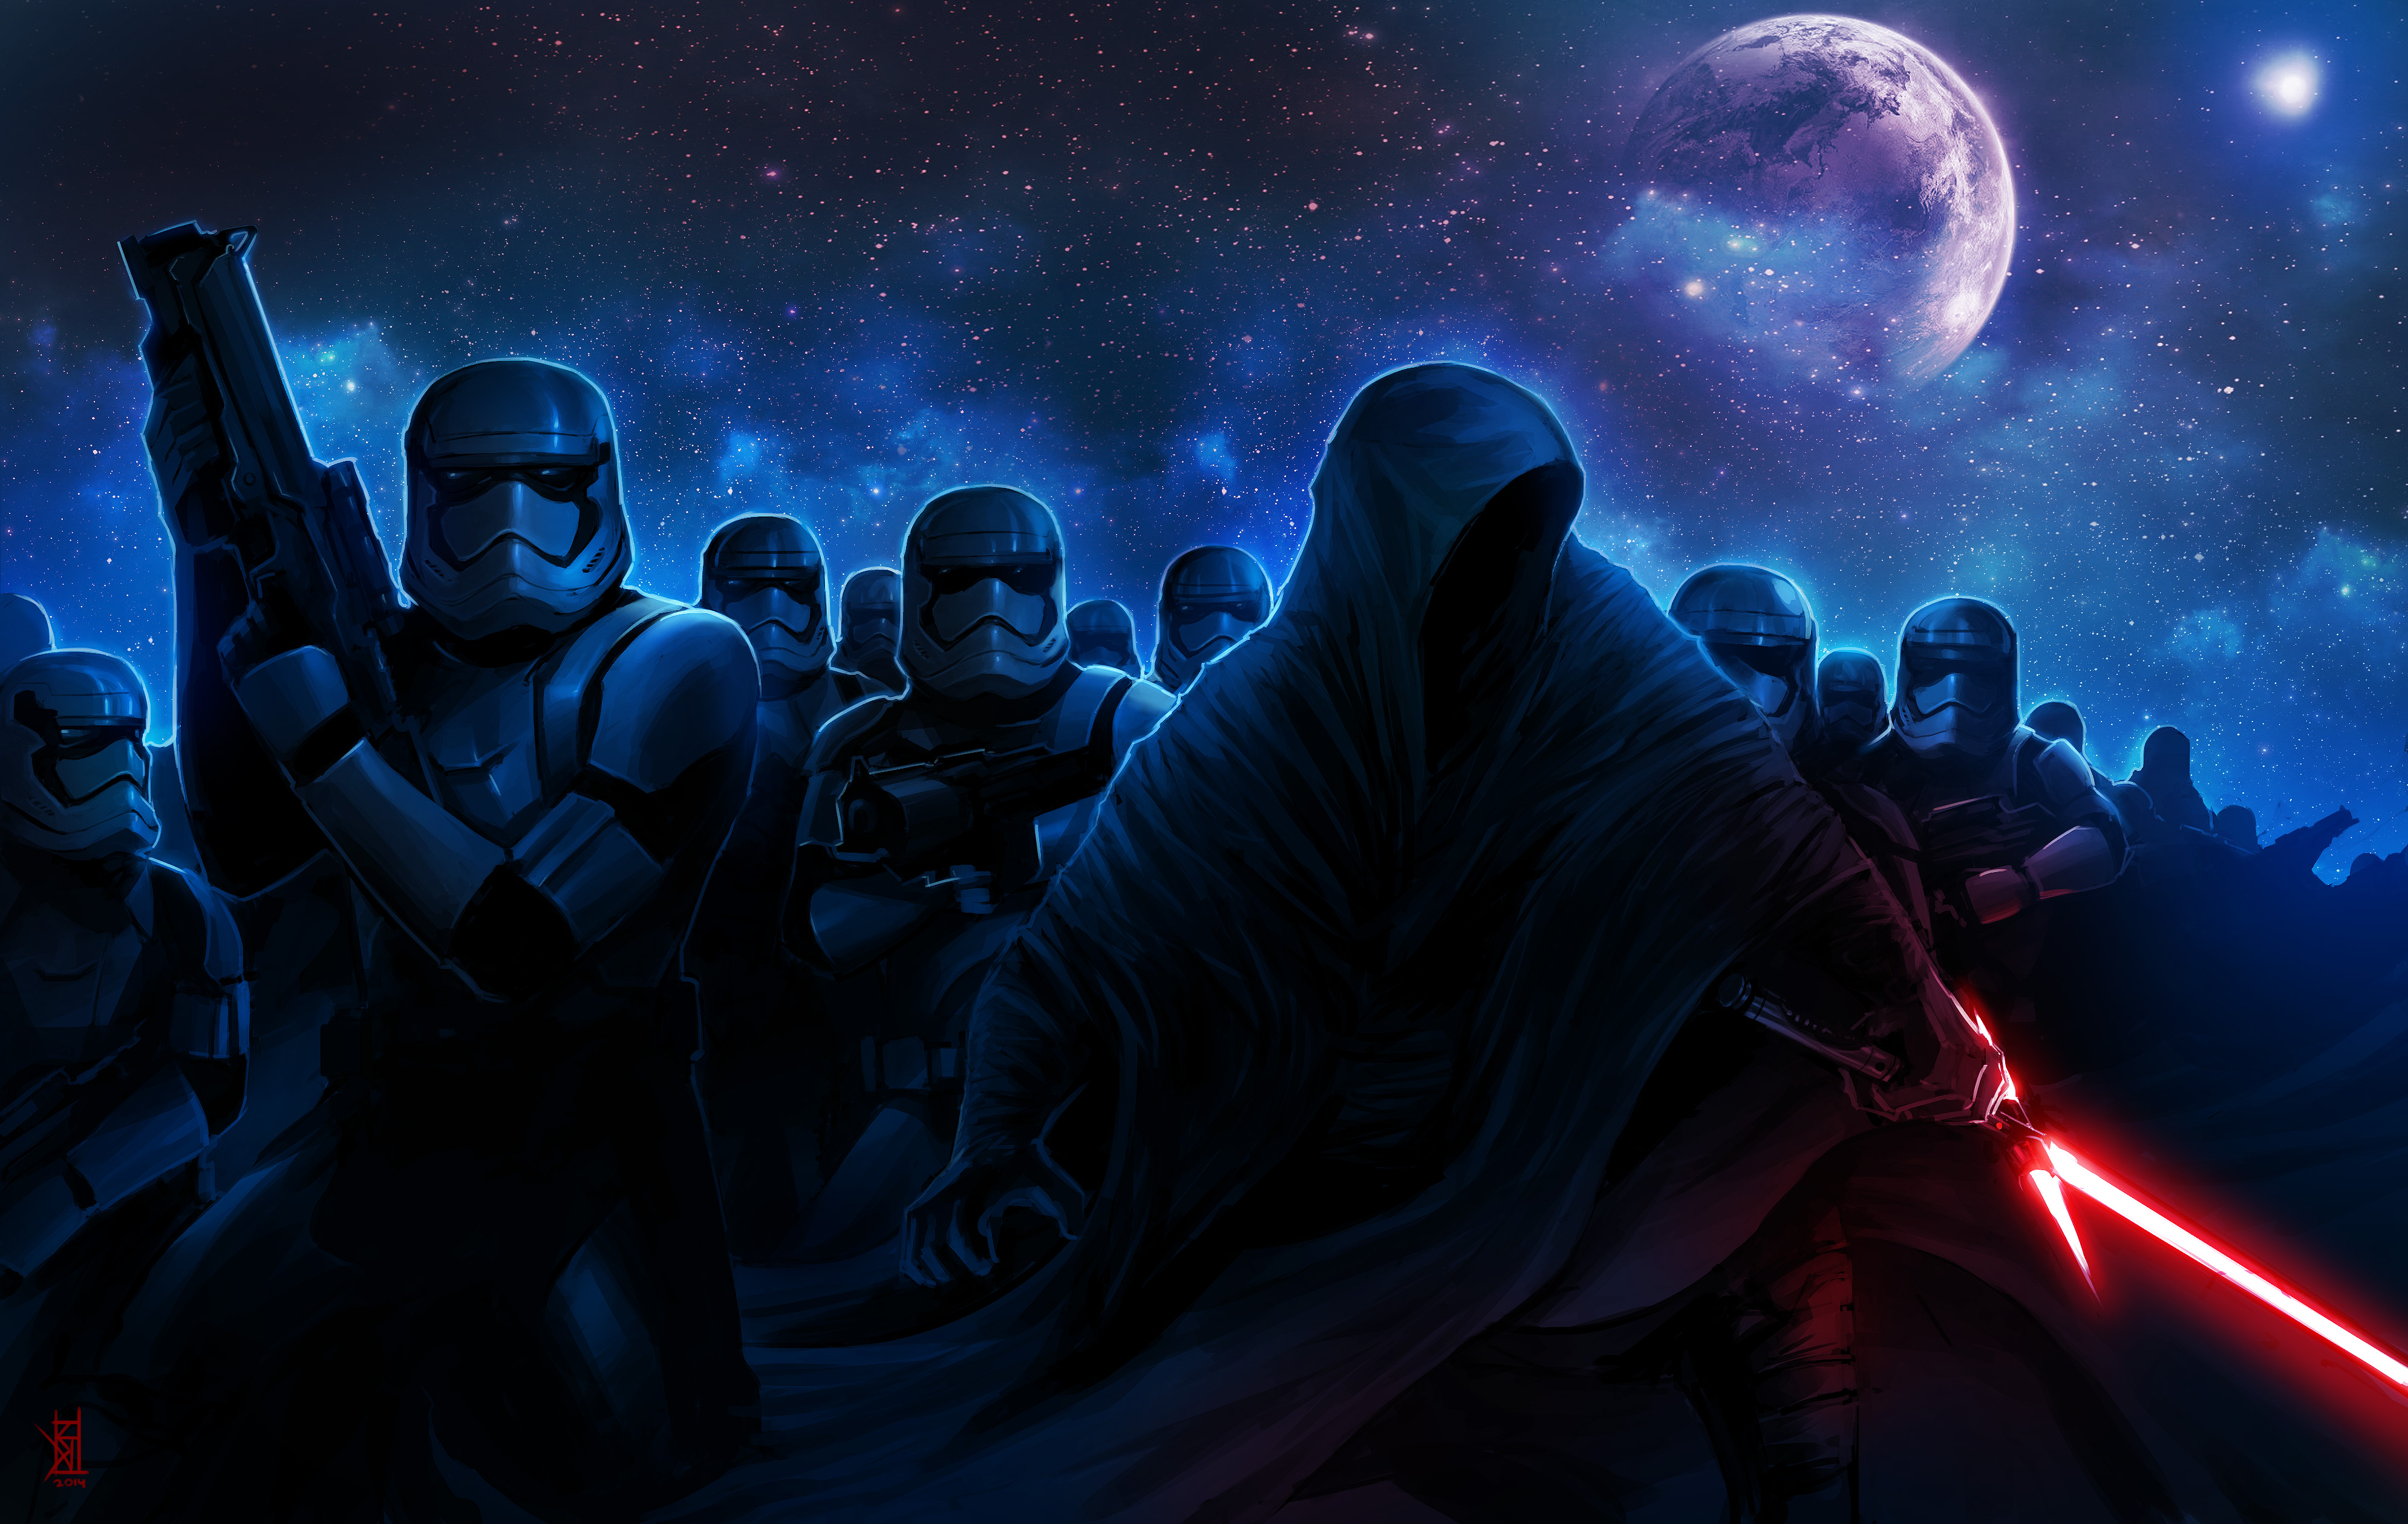 Star Wars Kylo Ren Lightsaber and Stormtrooper 4k Ultra HD Wallpaper